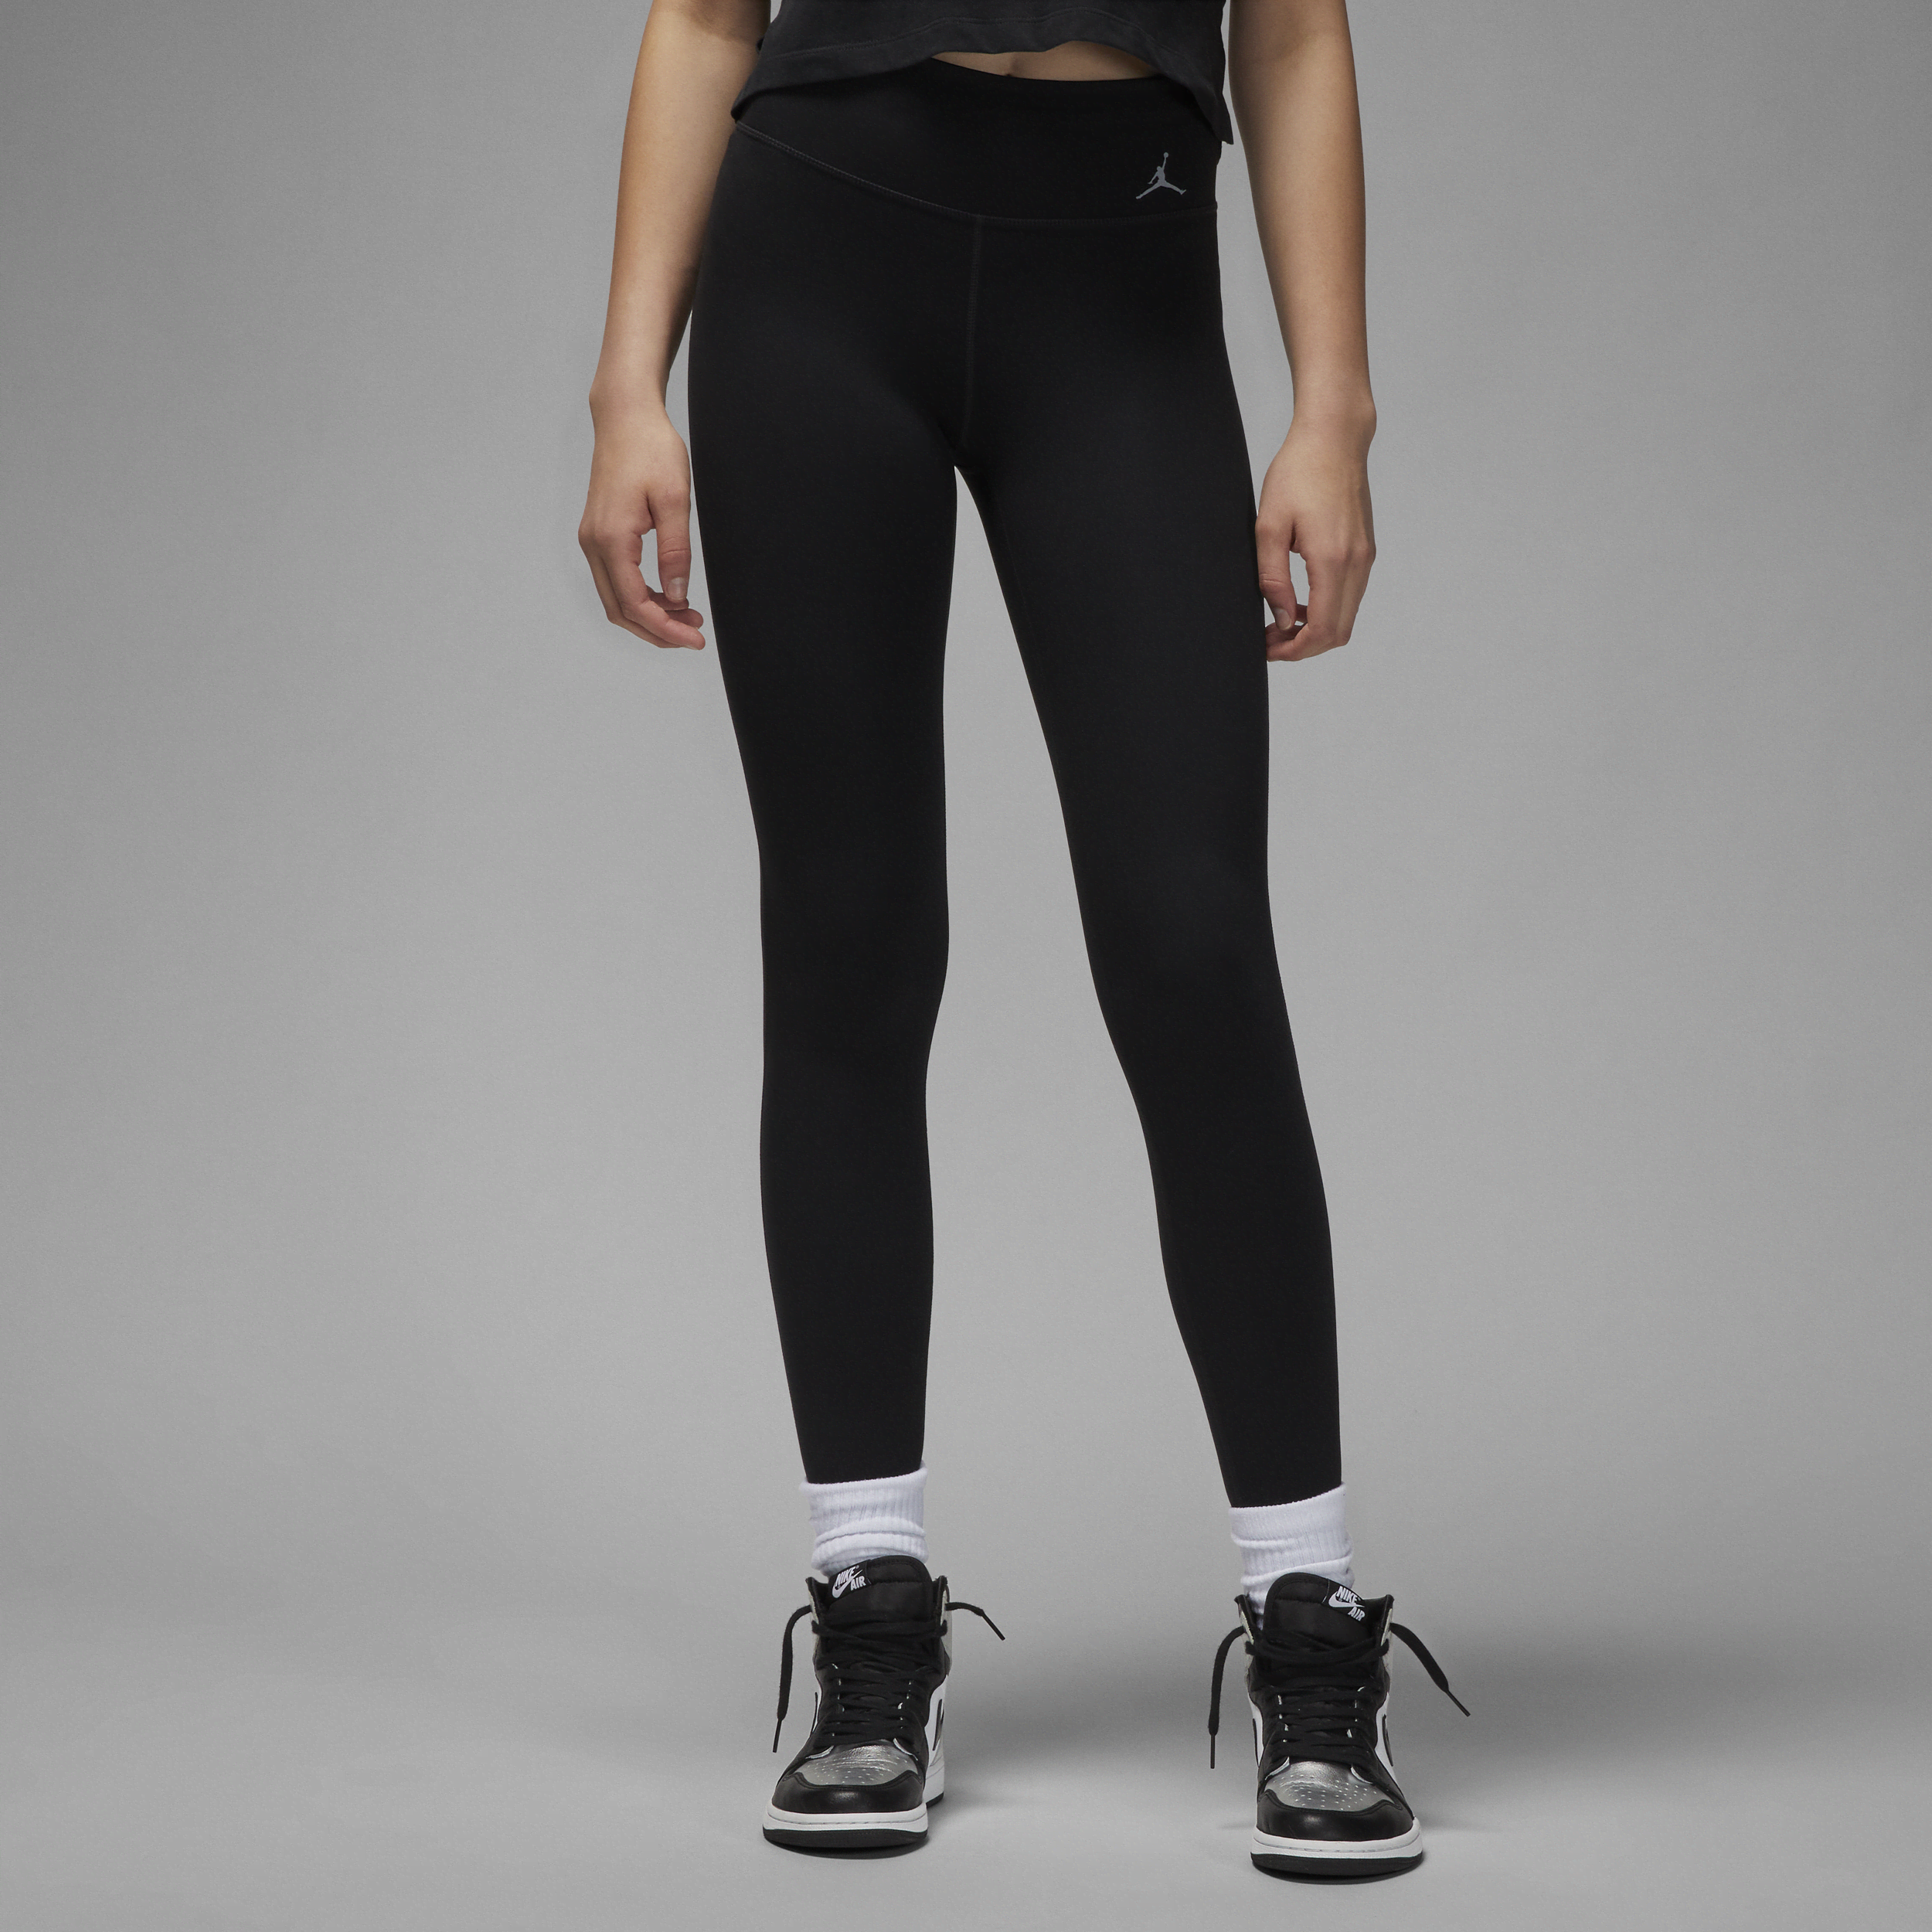 Jordan Sport Leggings con logotipo - Mujer - Negro